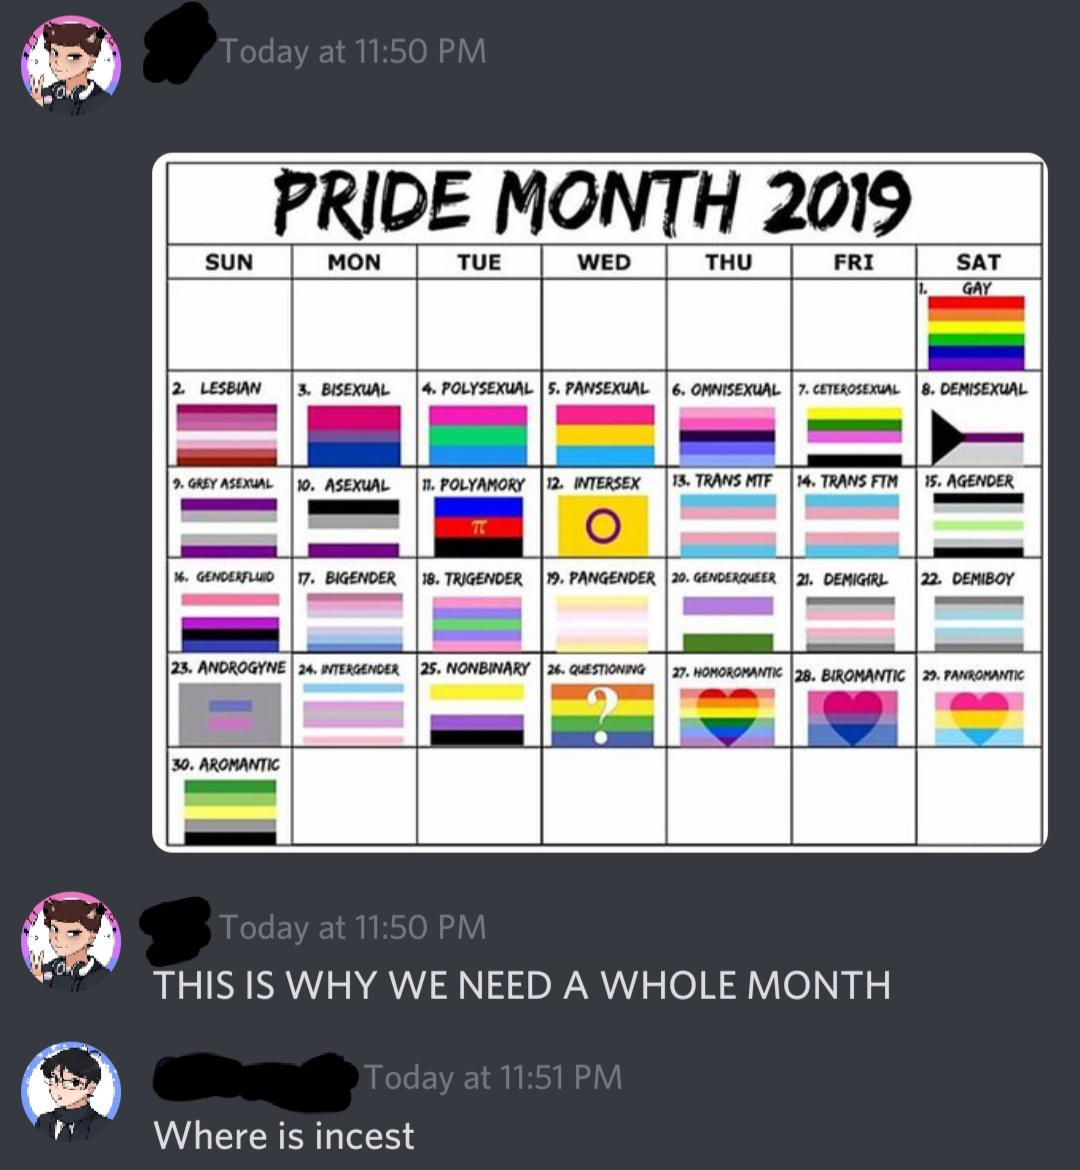 gay pride month days 2021 june